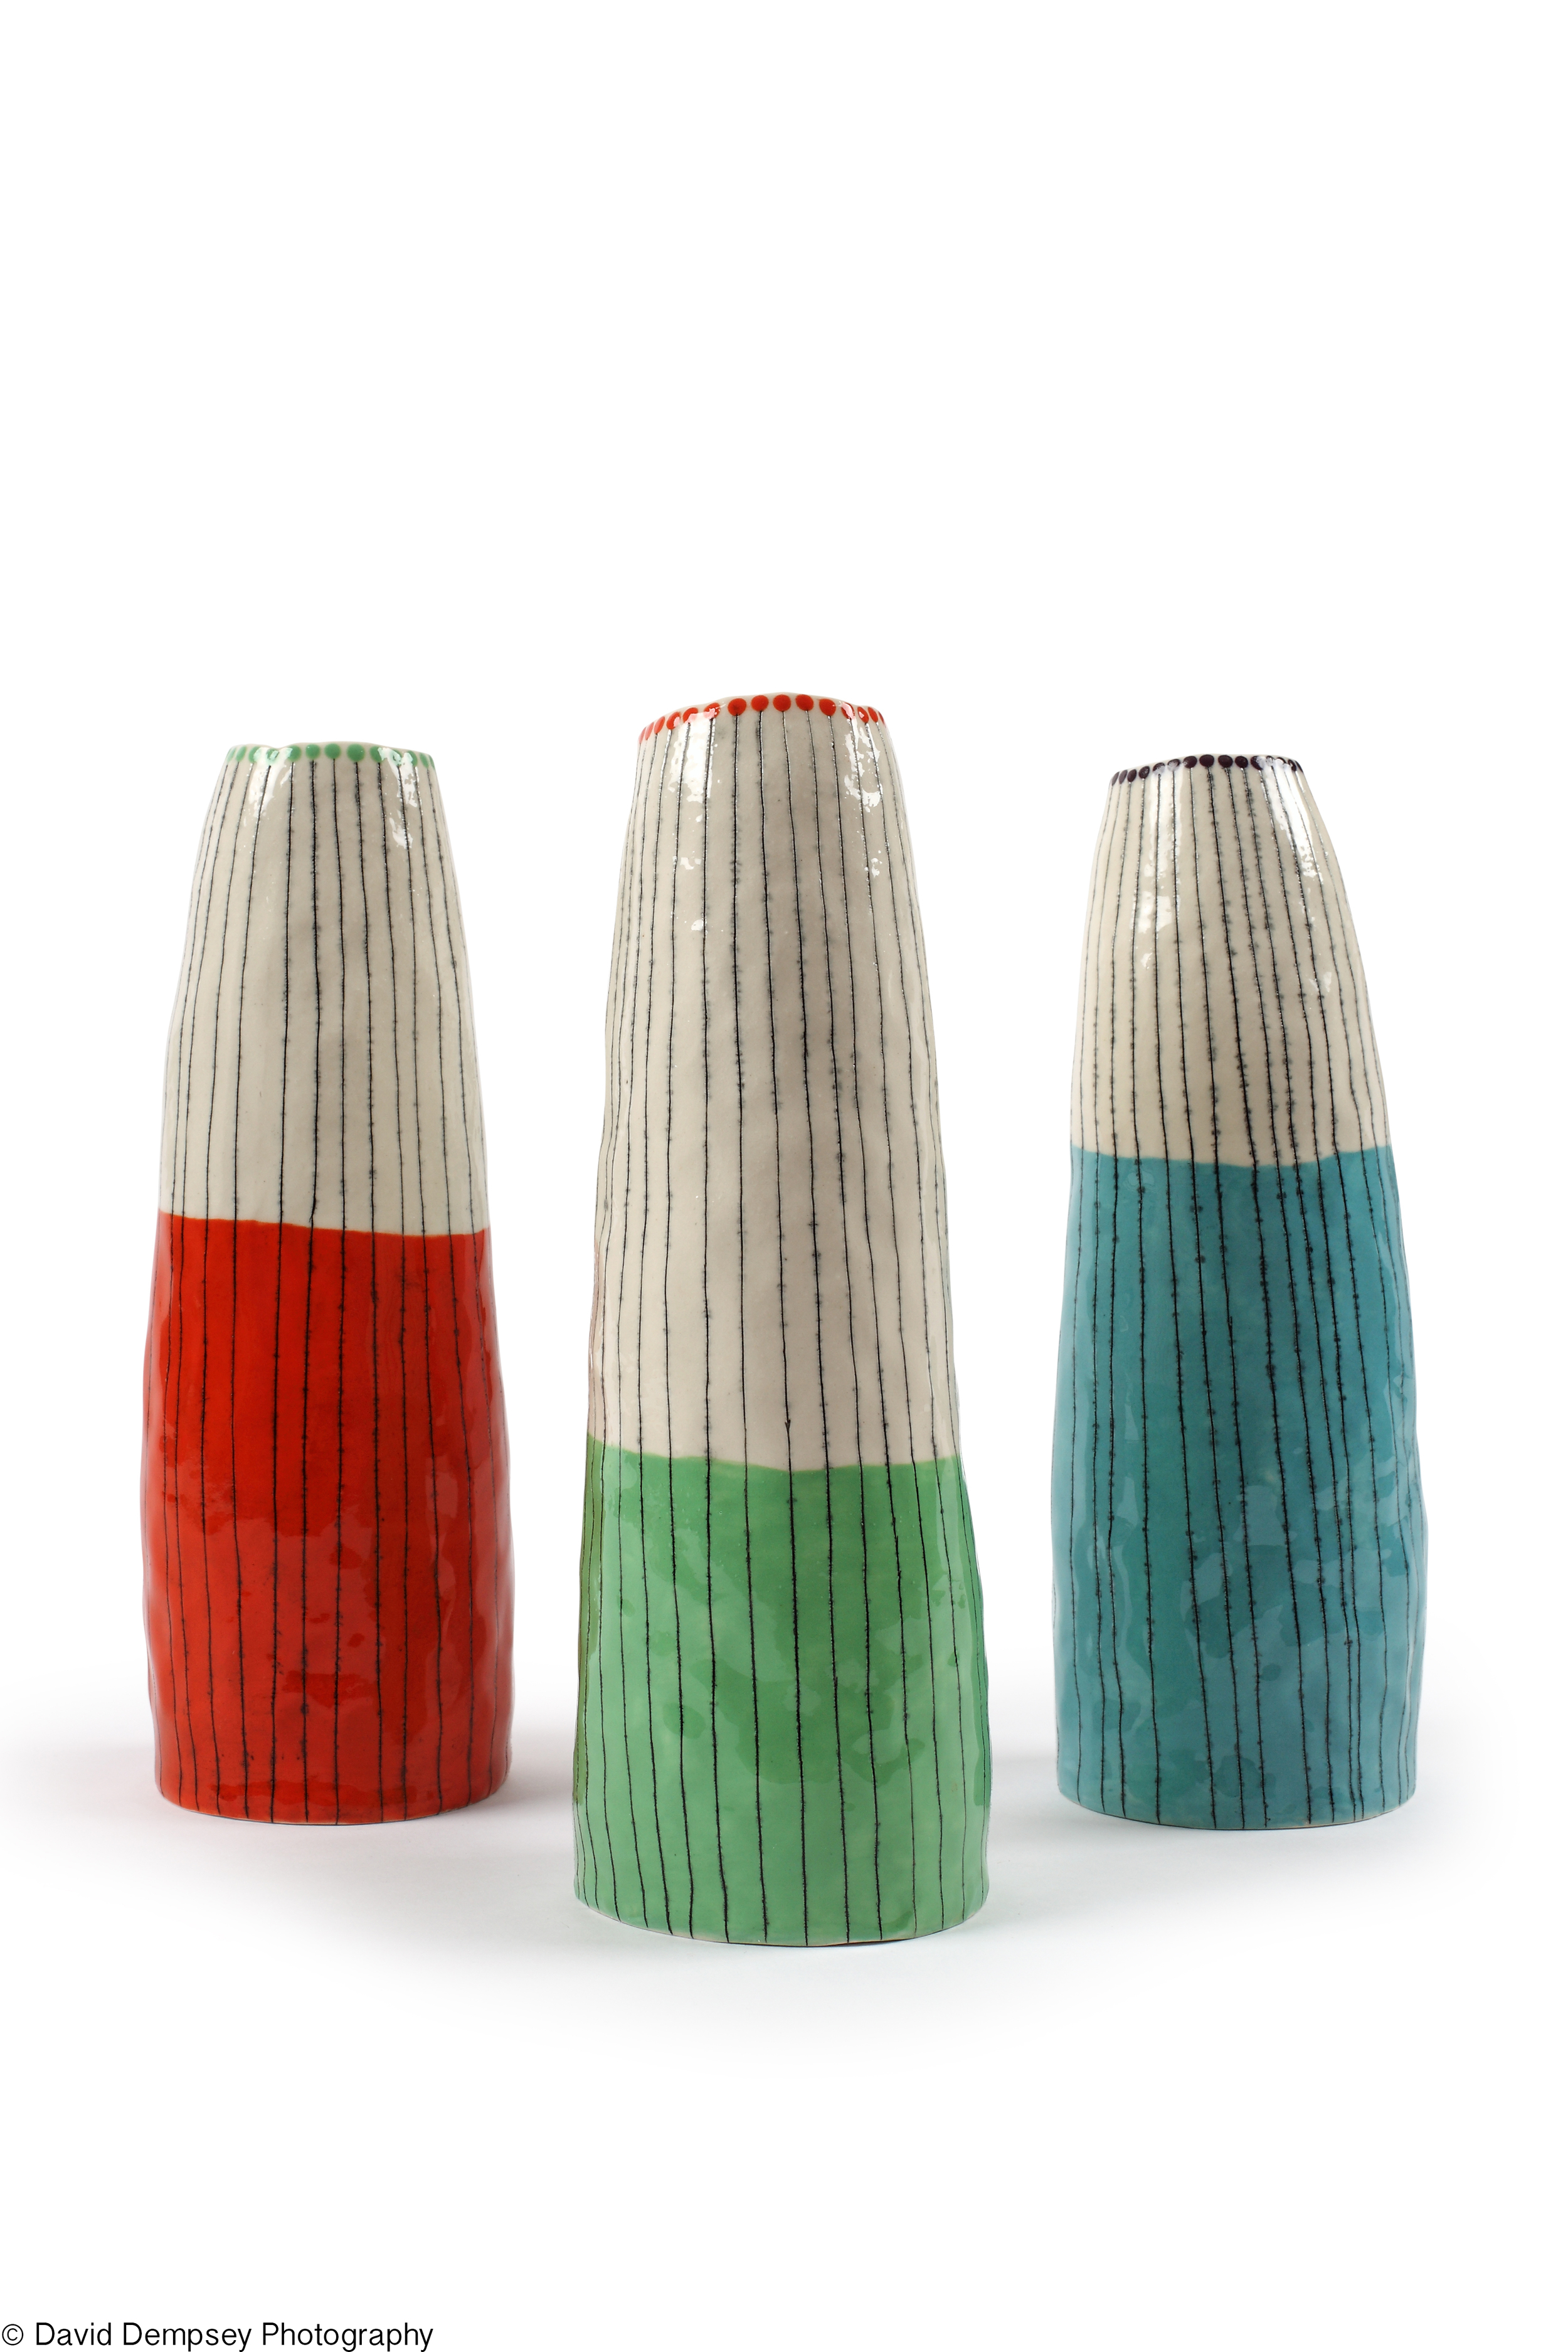 3 vases by Andrew Ludick